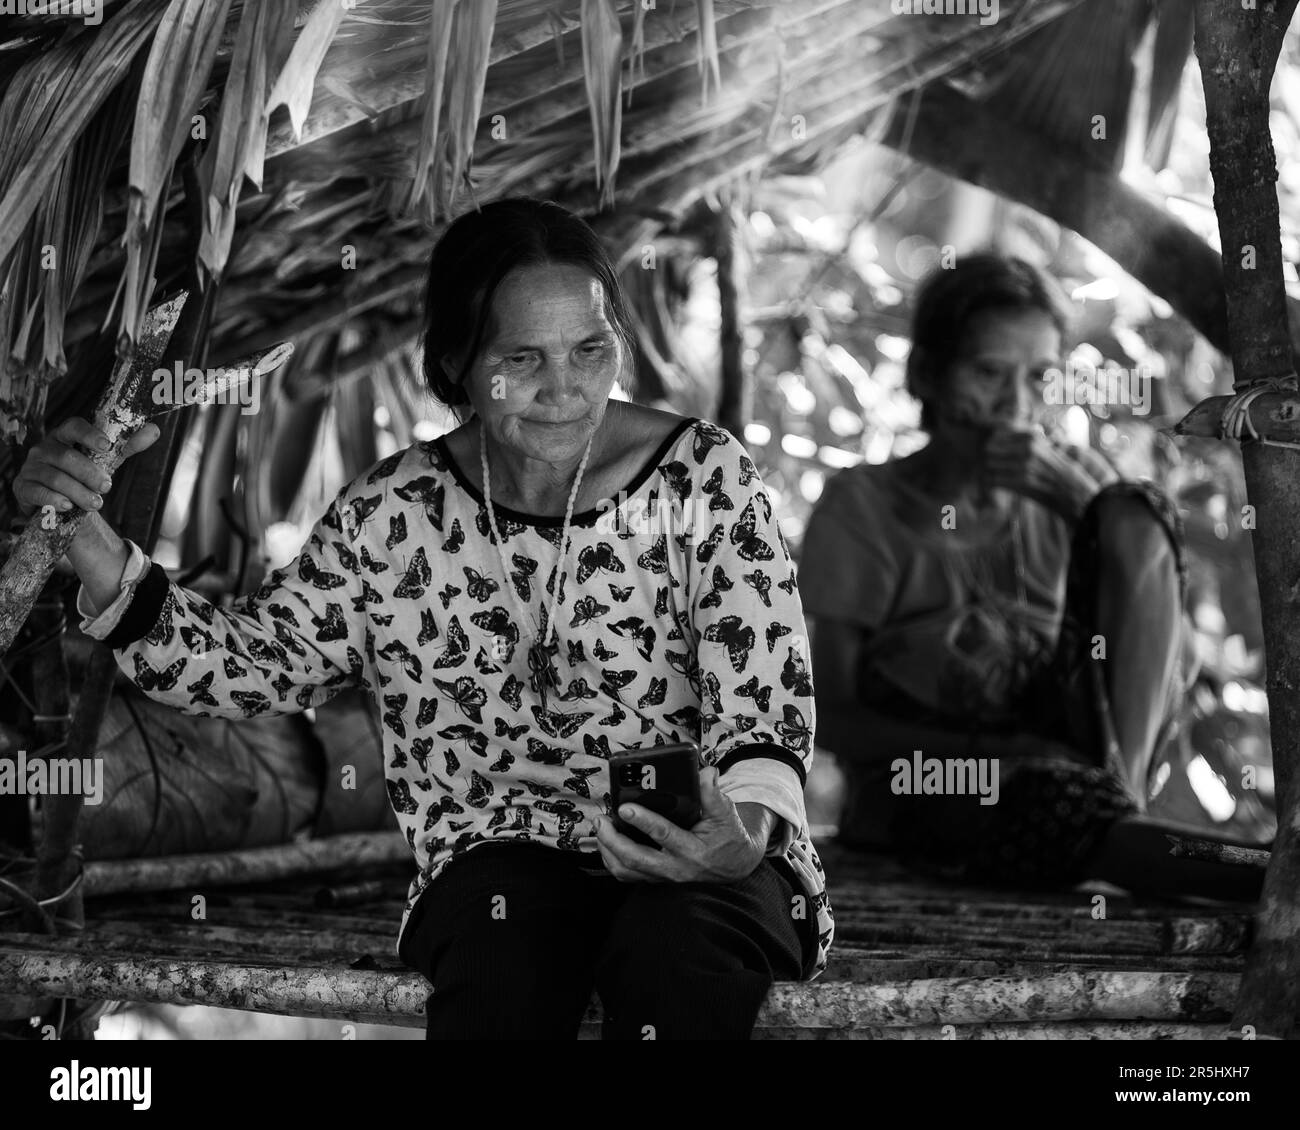 Penan People at Baram District Stock Photo